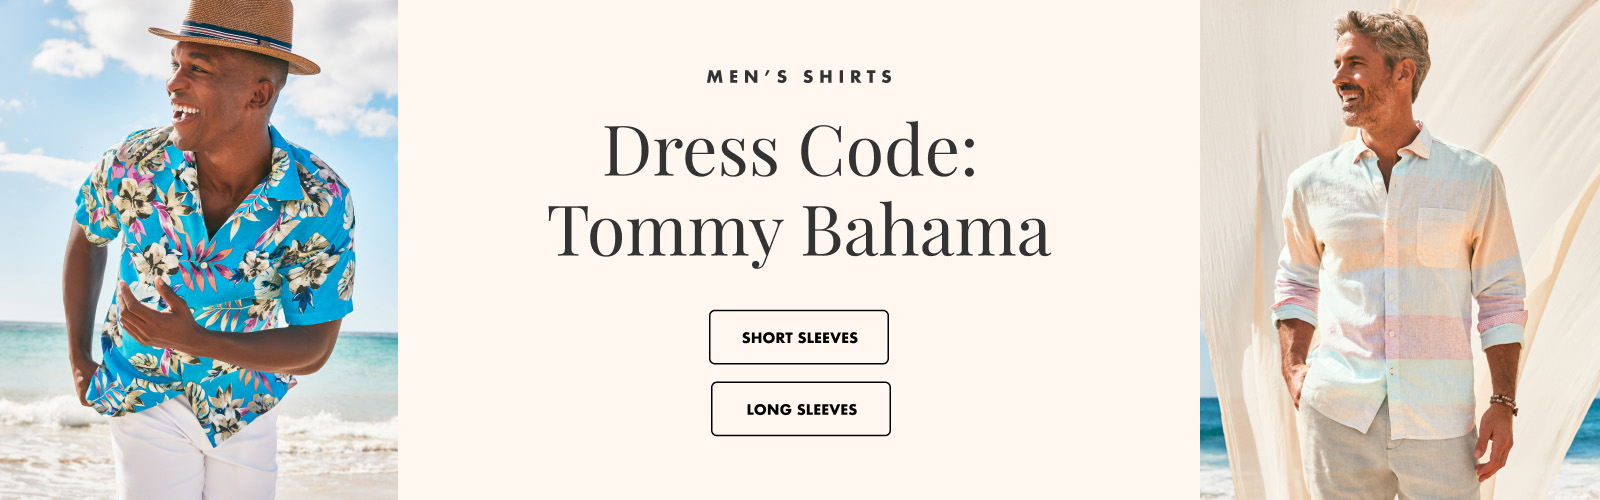 Men's Shirts Dress Code: Tommy Bahama - Short & Long-Sleeve Shirts